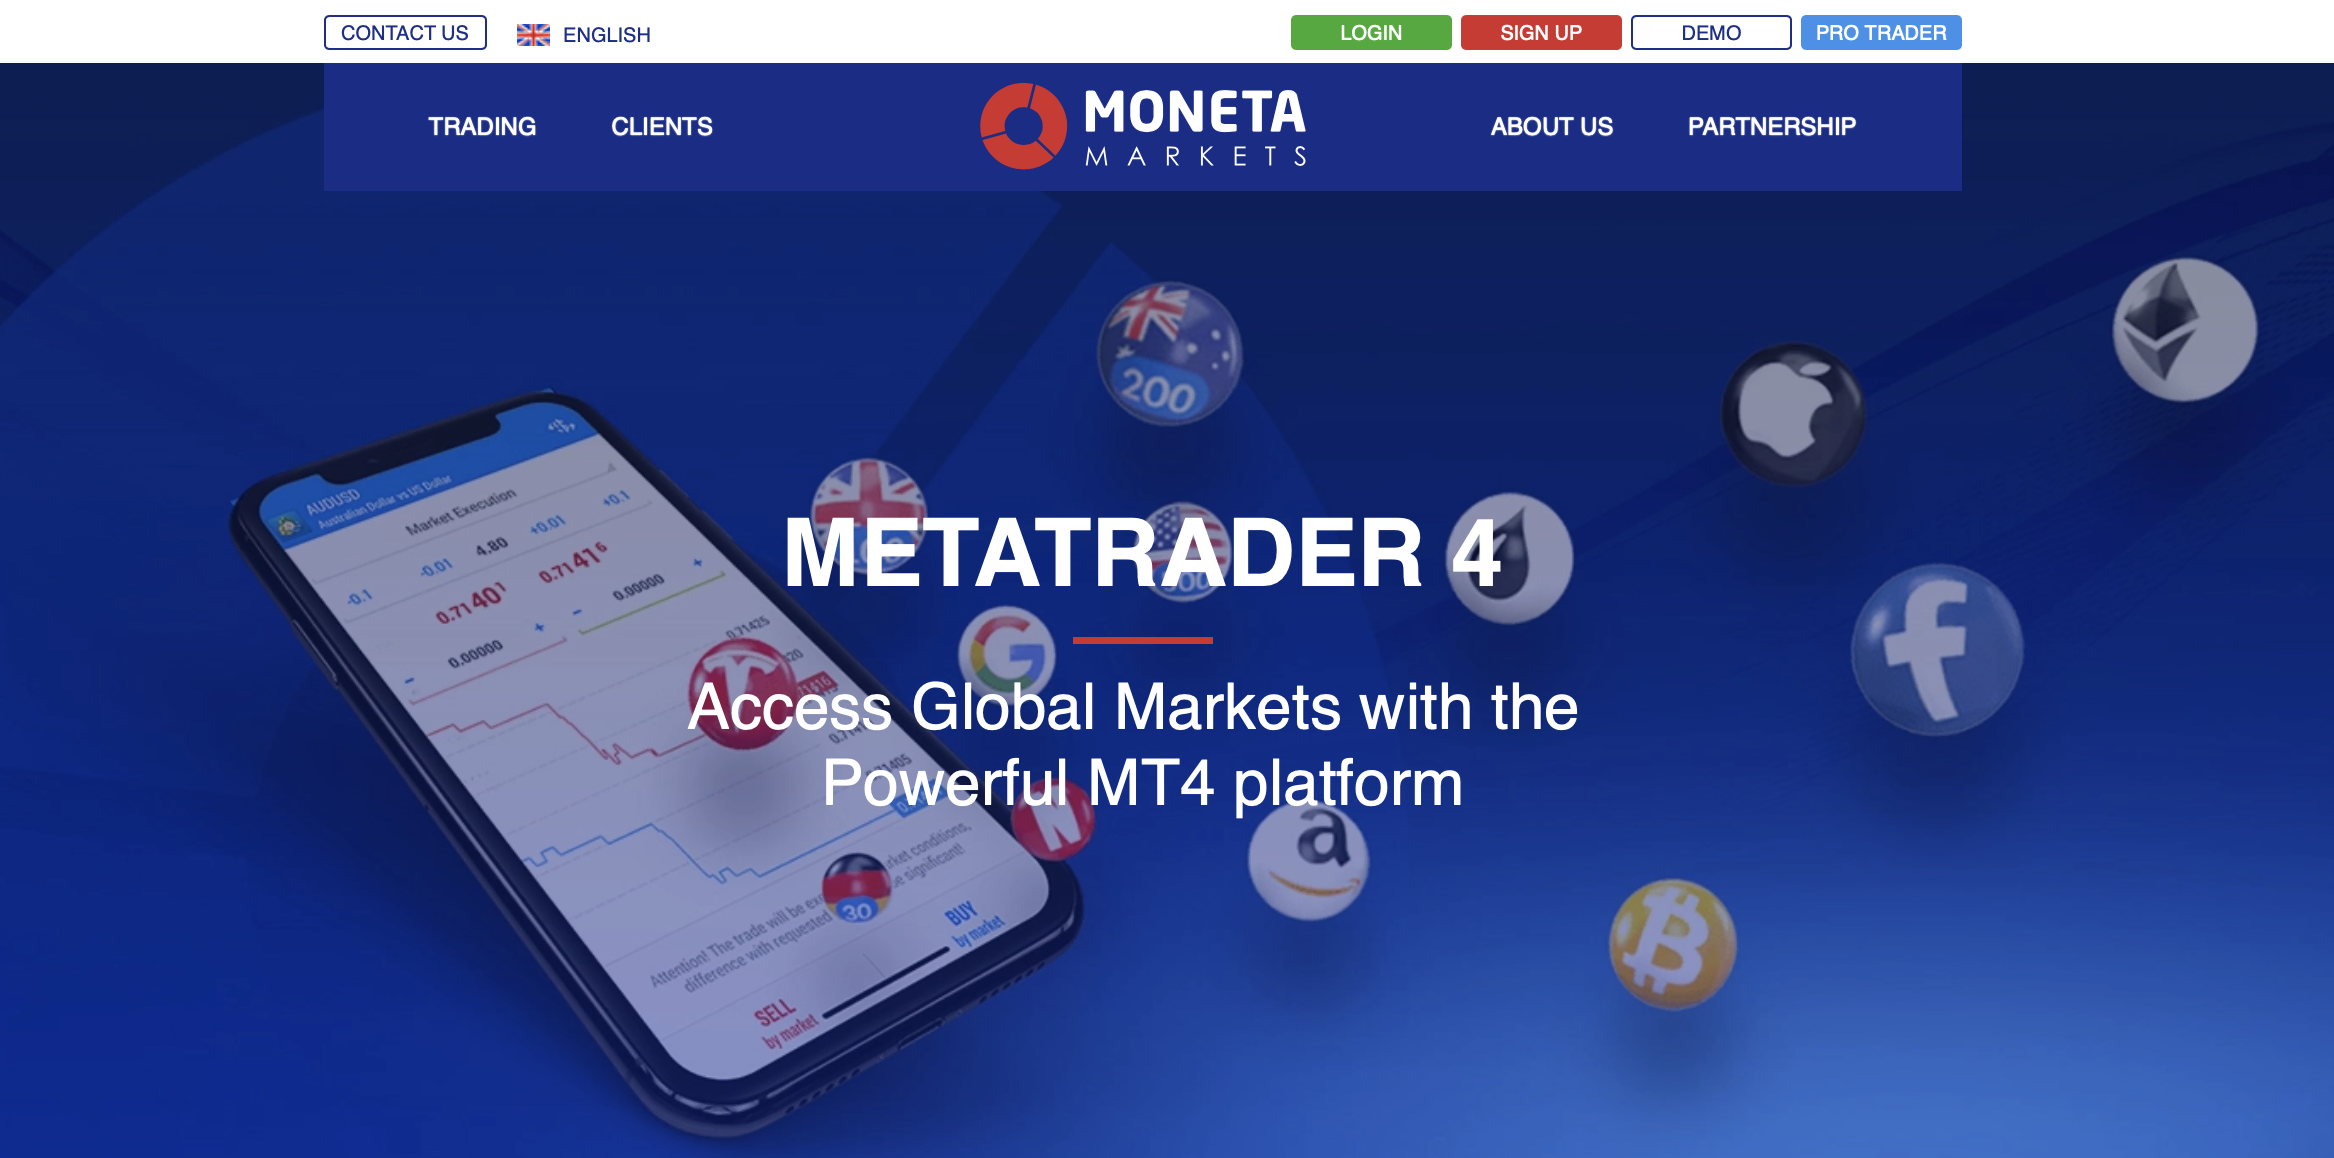 The official MetaTrader 4 landingpage of Moneta Markets